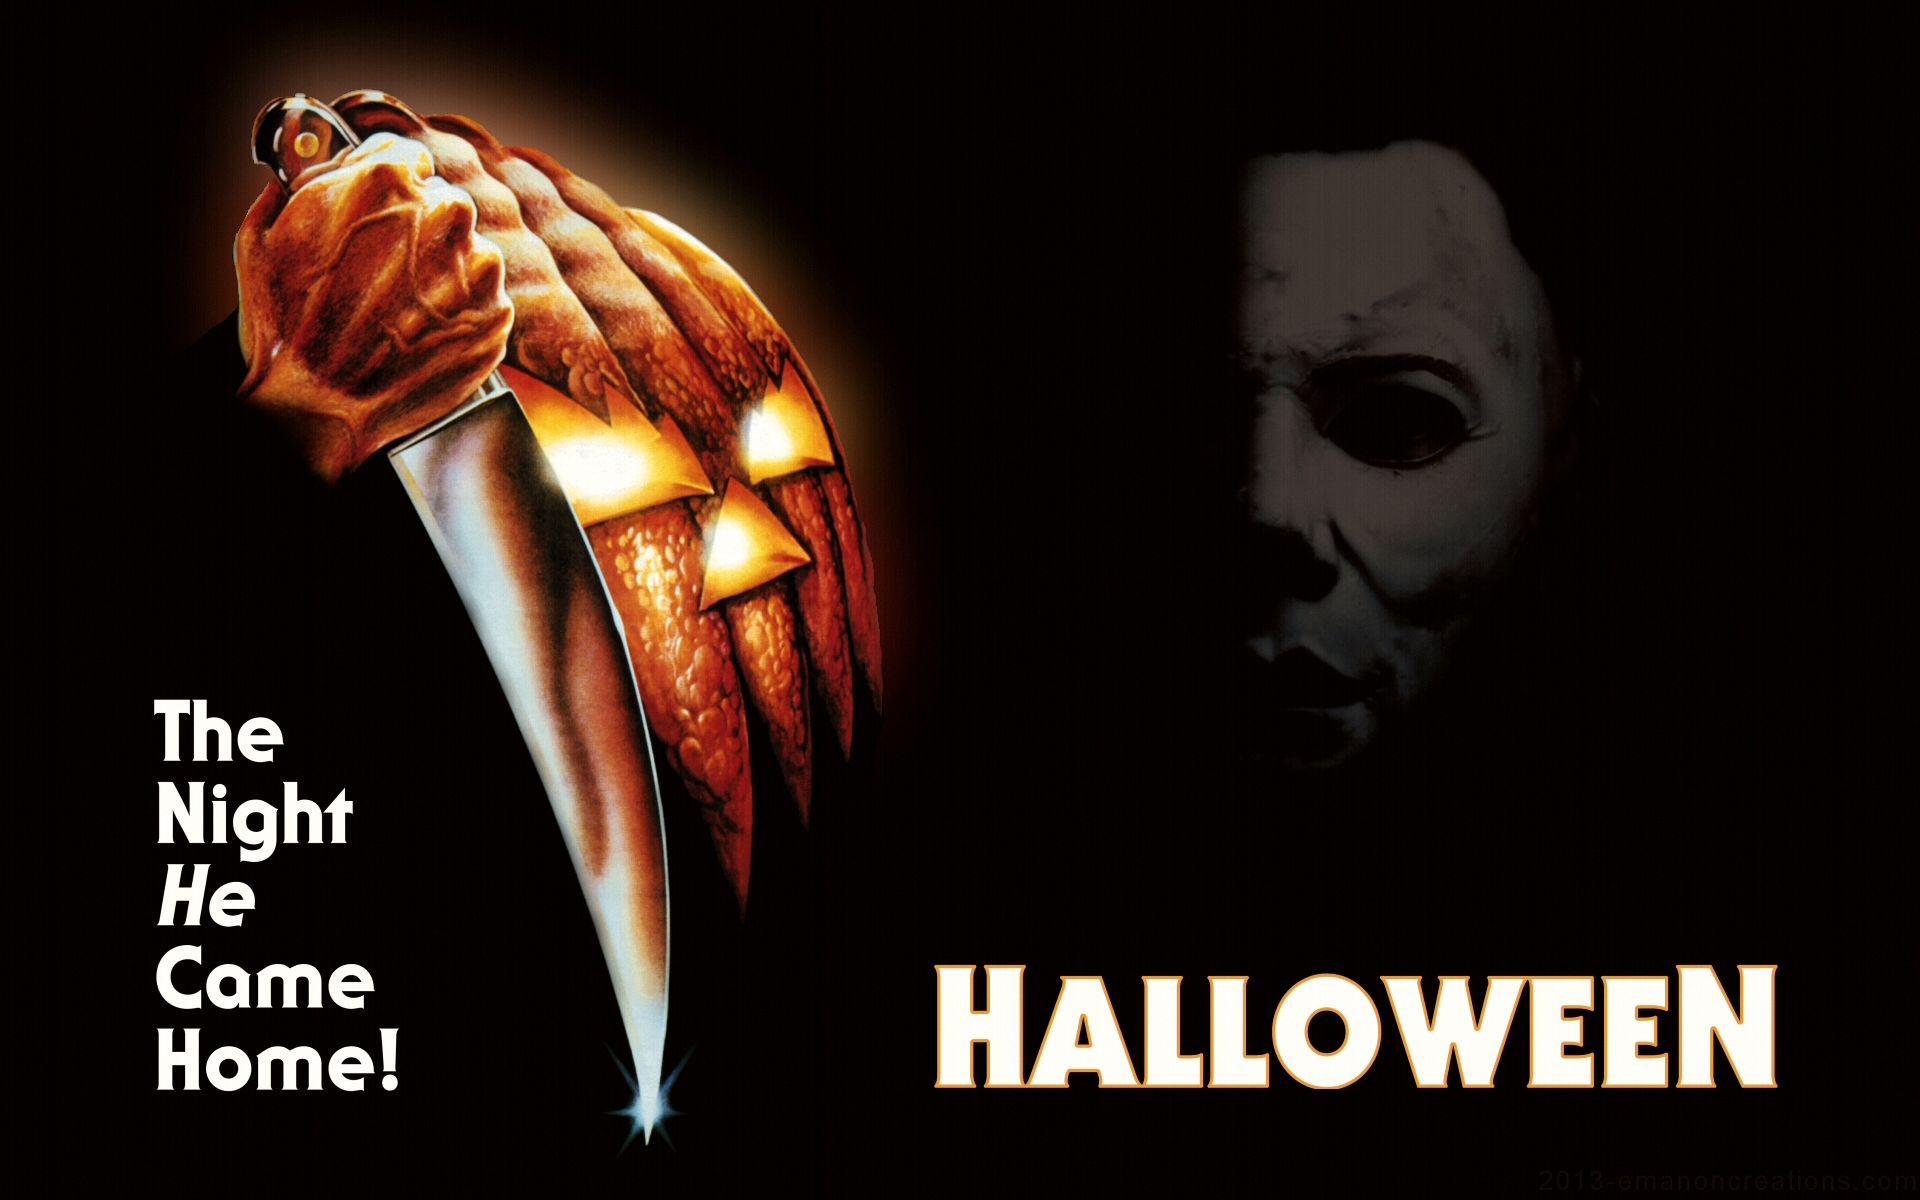 Halloween Movie.com. Free HD Wallpaper. Halloween movies, Horror movies, Horror